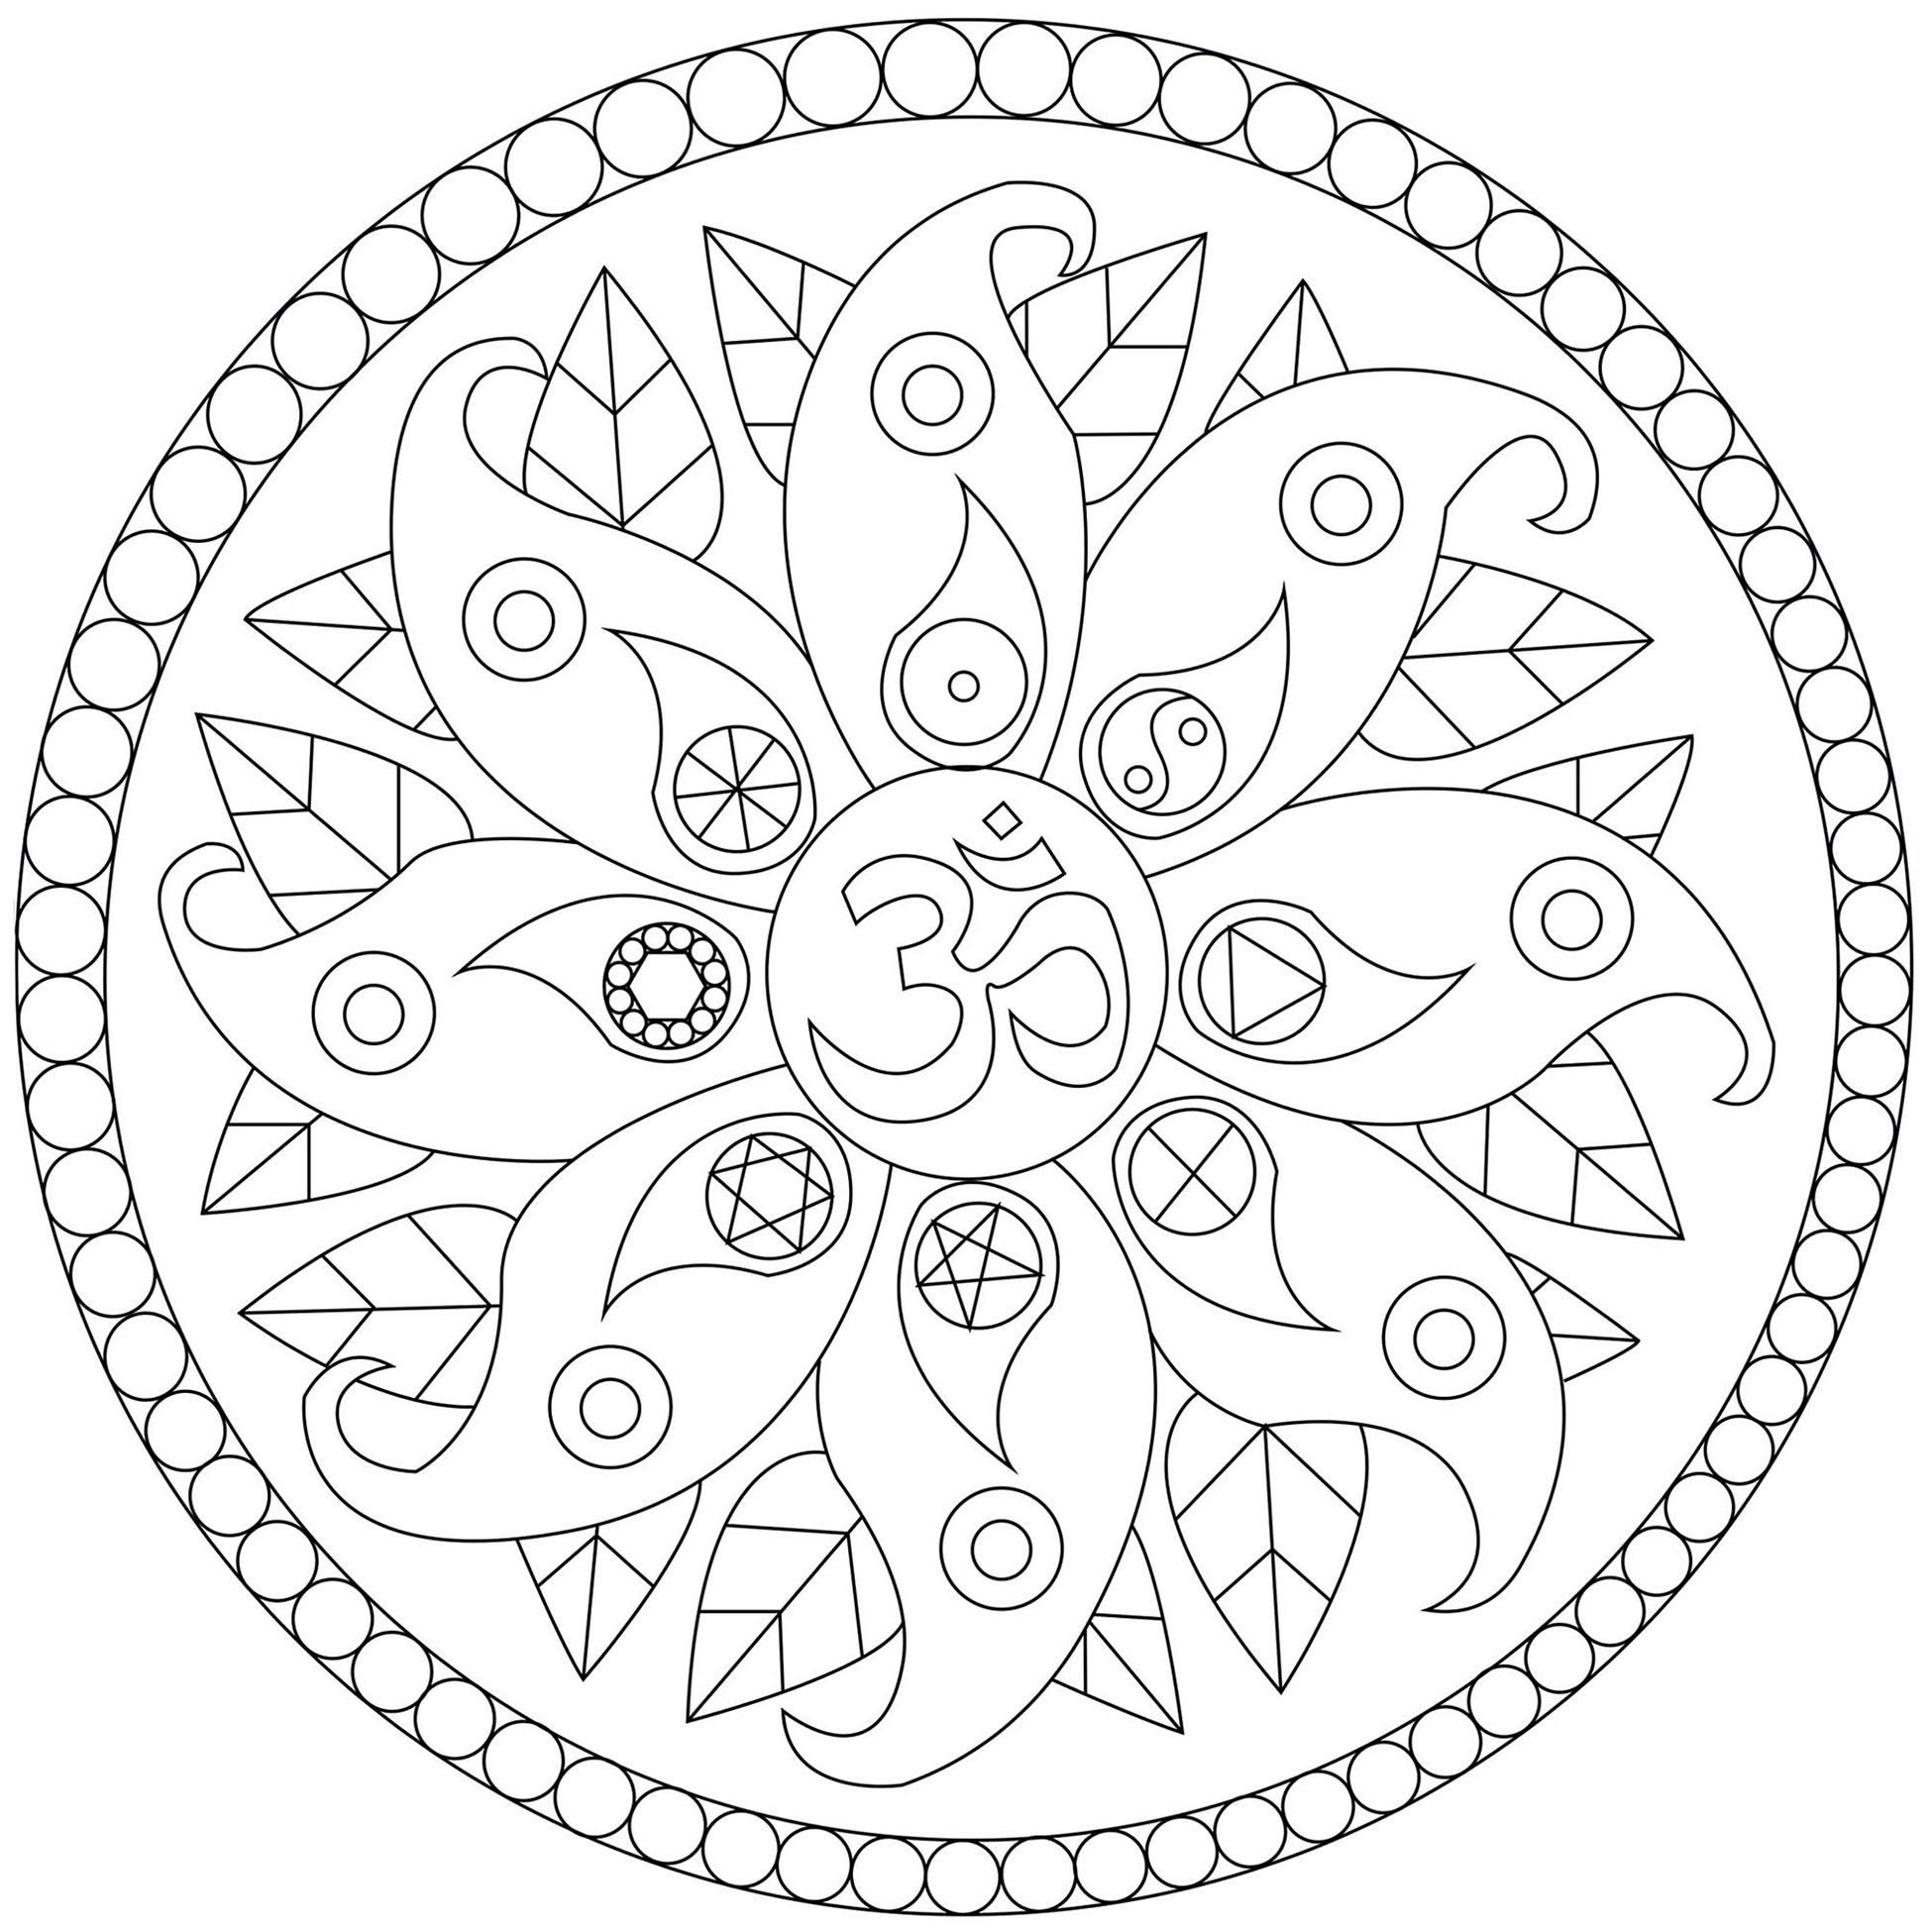 Simple Mandala with symbols - Easy Mandalas for kids - 100 ...